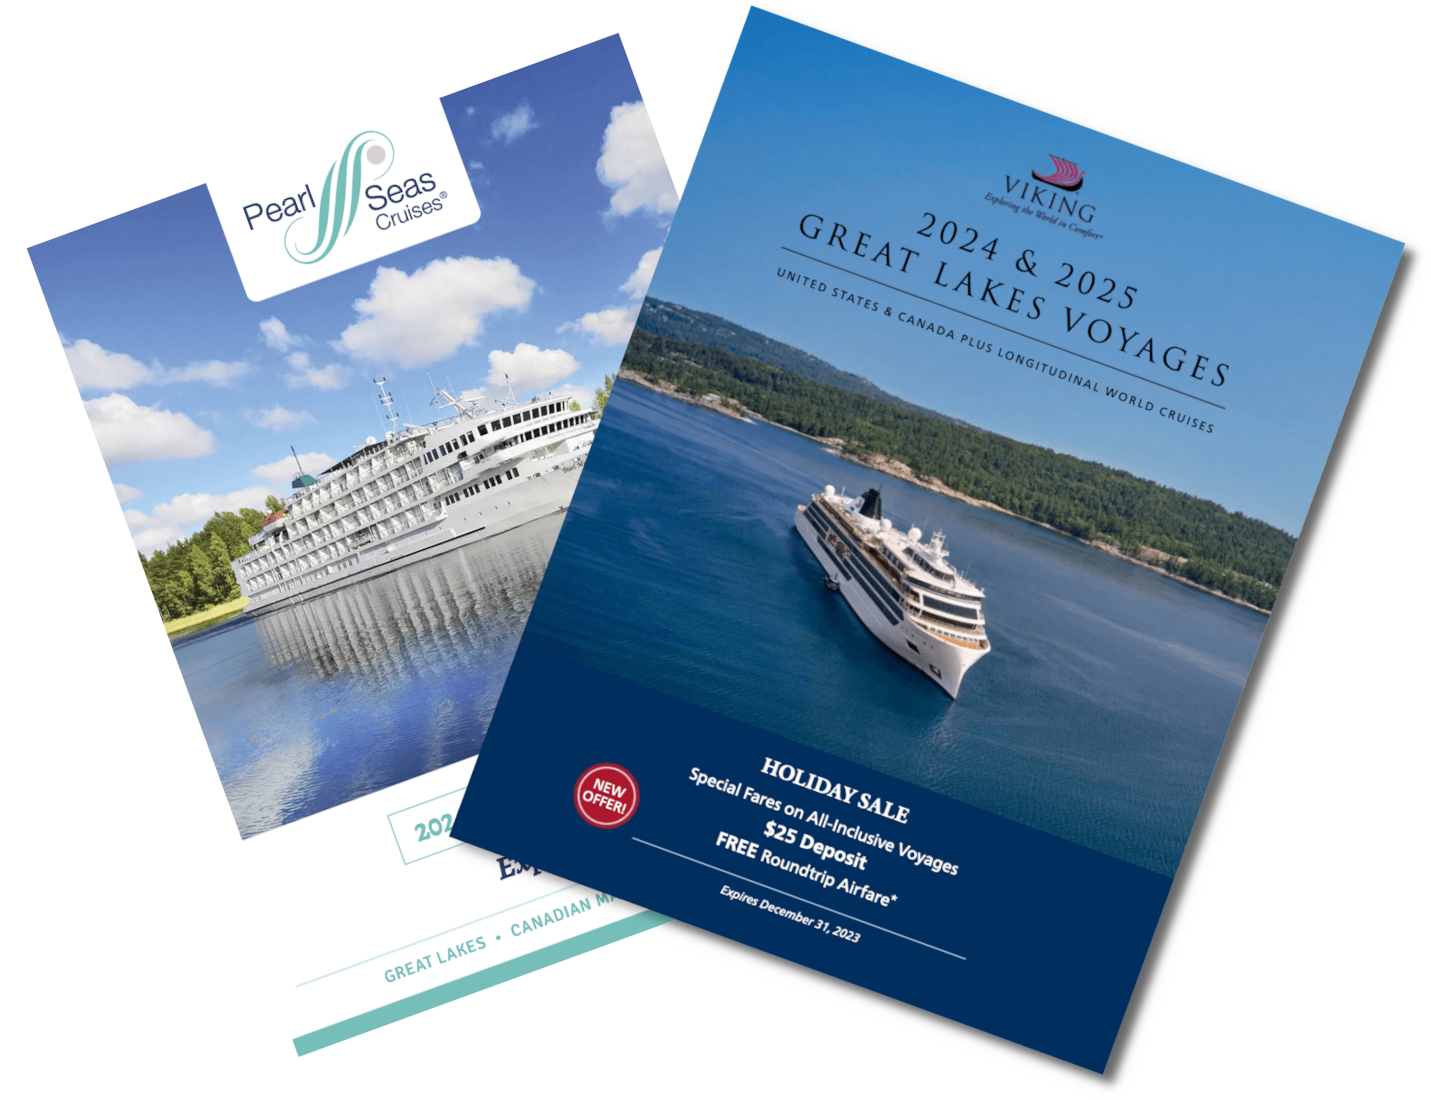 Small Ship Cruises brochure covers